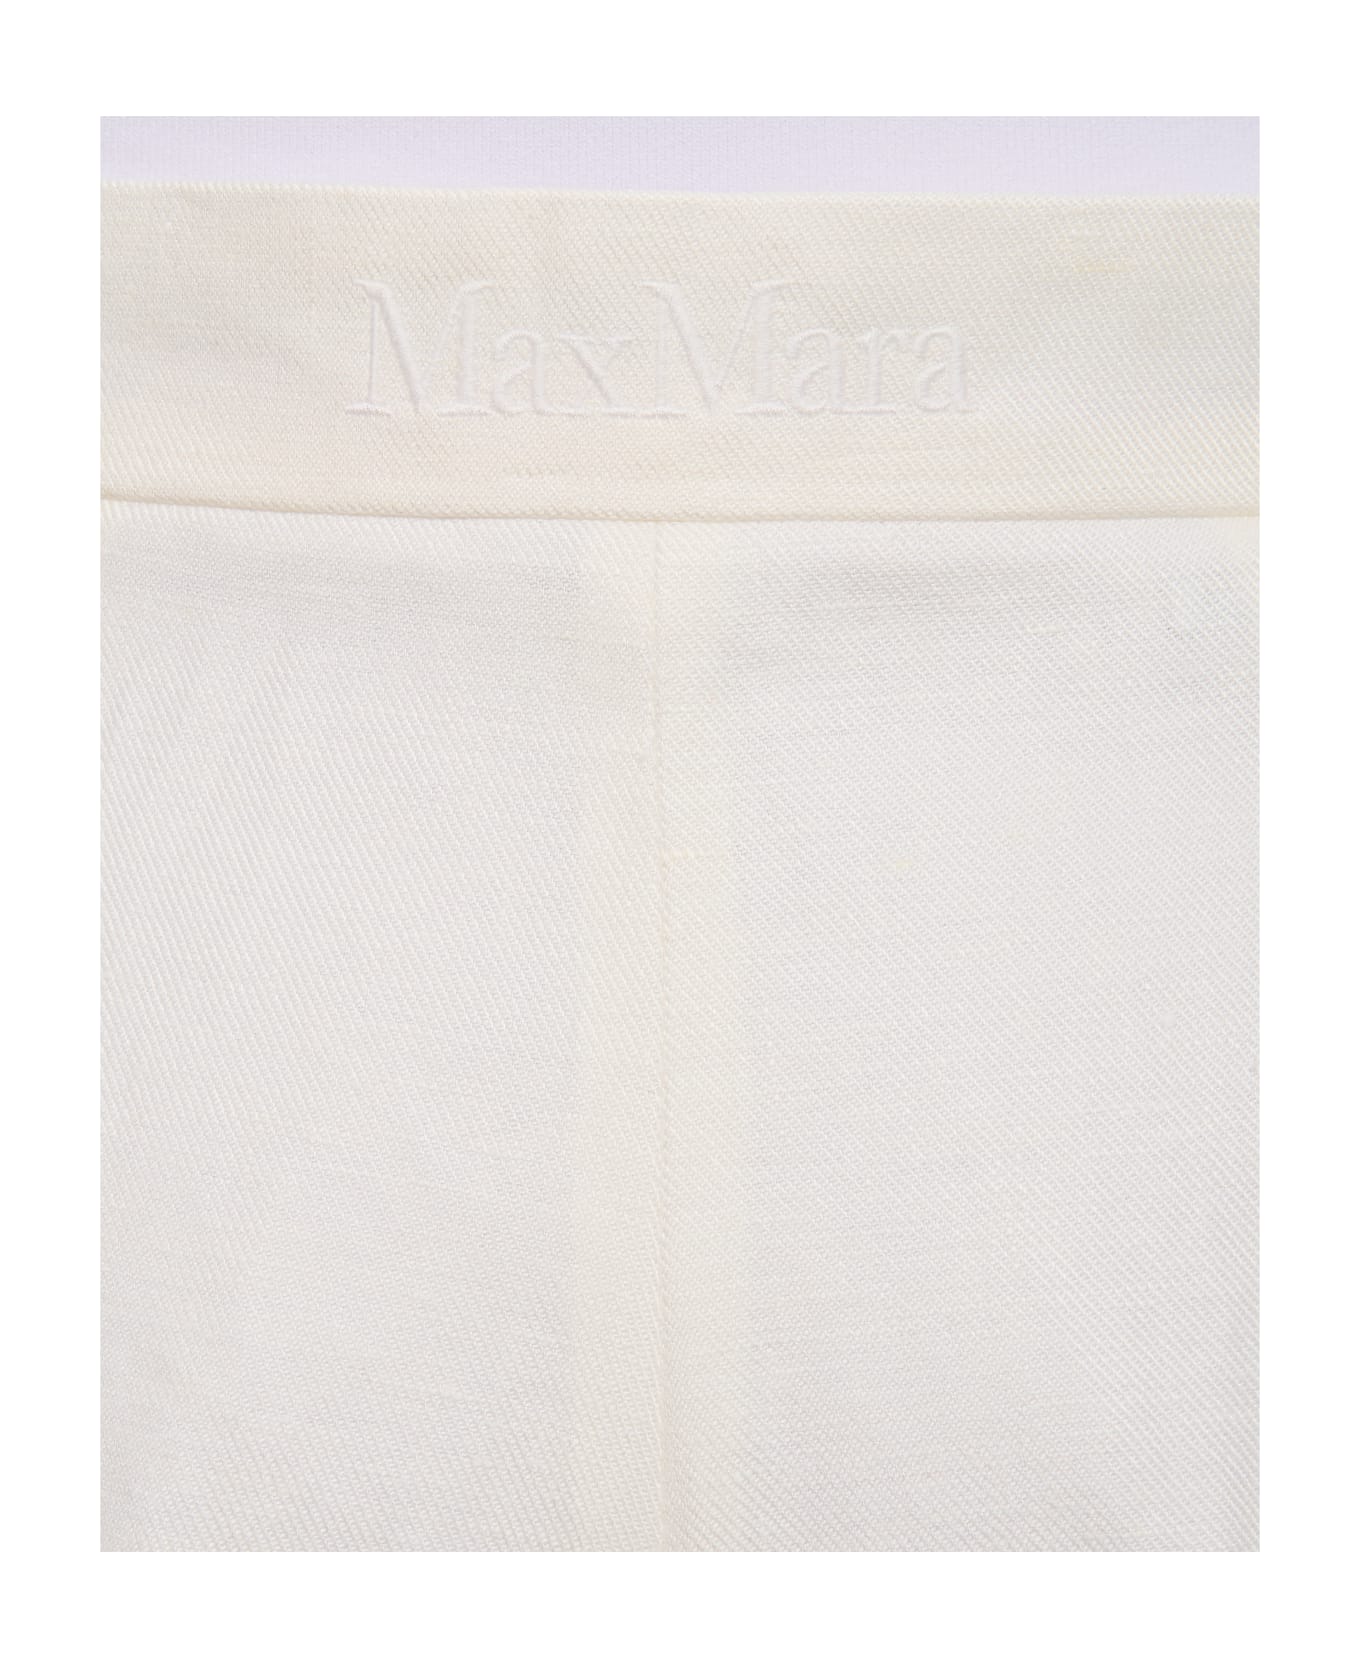 Max Mara Hangar Linen Pants - White ボトムス